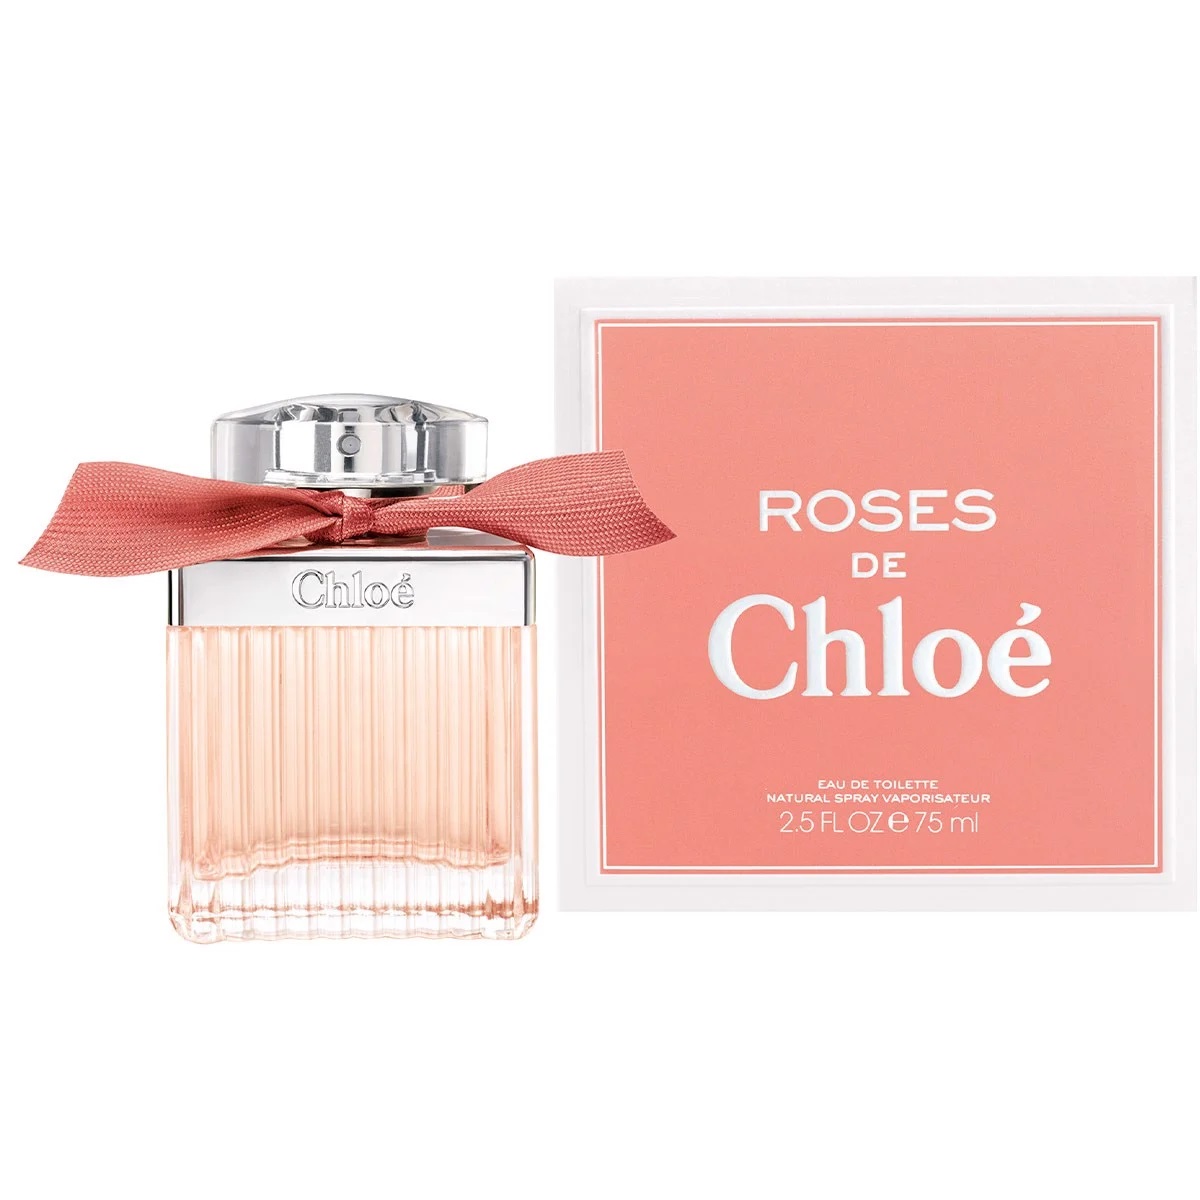 NƯỚC HOA NỮ CHLOE ROSES DE CHLOE EDT 3